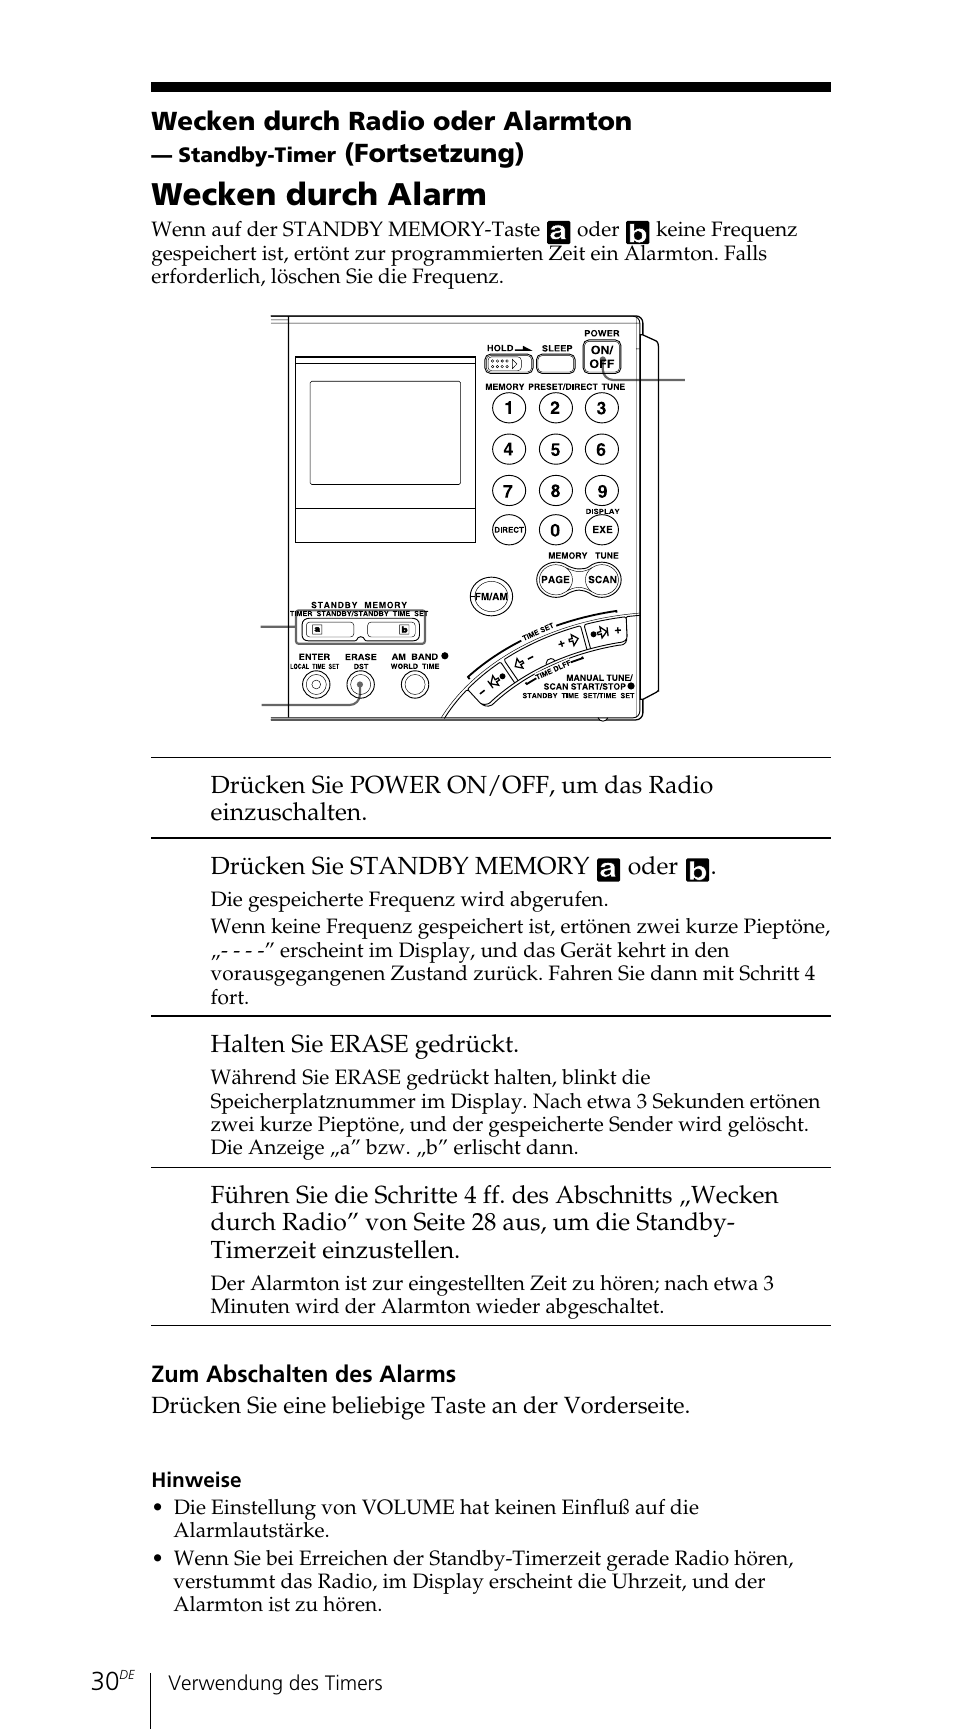 Wecken durch alarm | Sony ICF-SW7600GR User Manual | Page 110 / 242